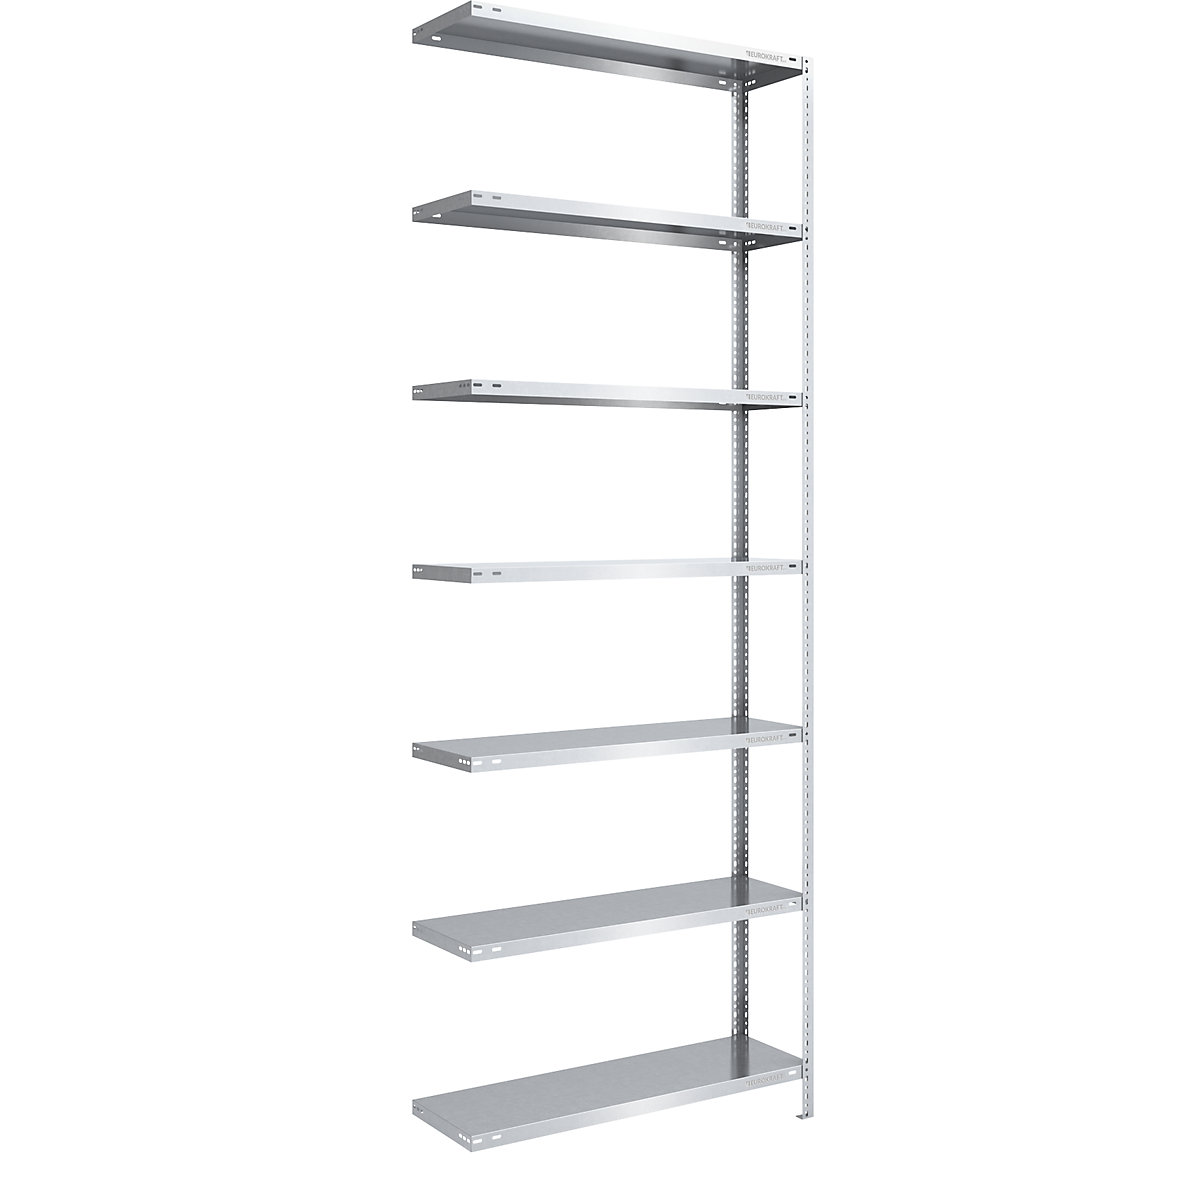 Bolt-together storage shelving, zinc plated, medium duty – eurokraft pro, shelf unit height 3000 mm, shelf width 1000 mm, depth 400 mm, extension shelf unit-12